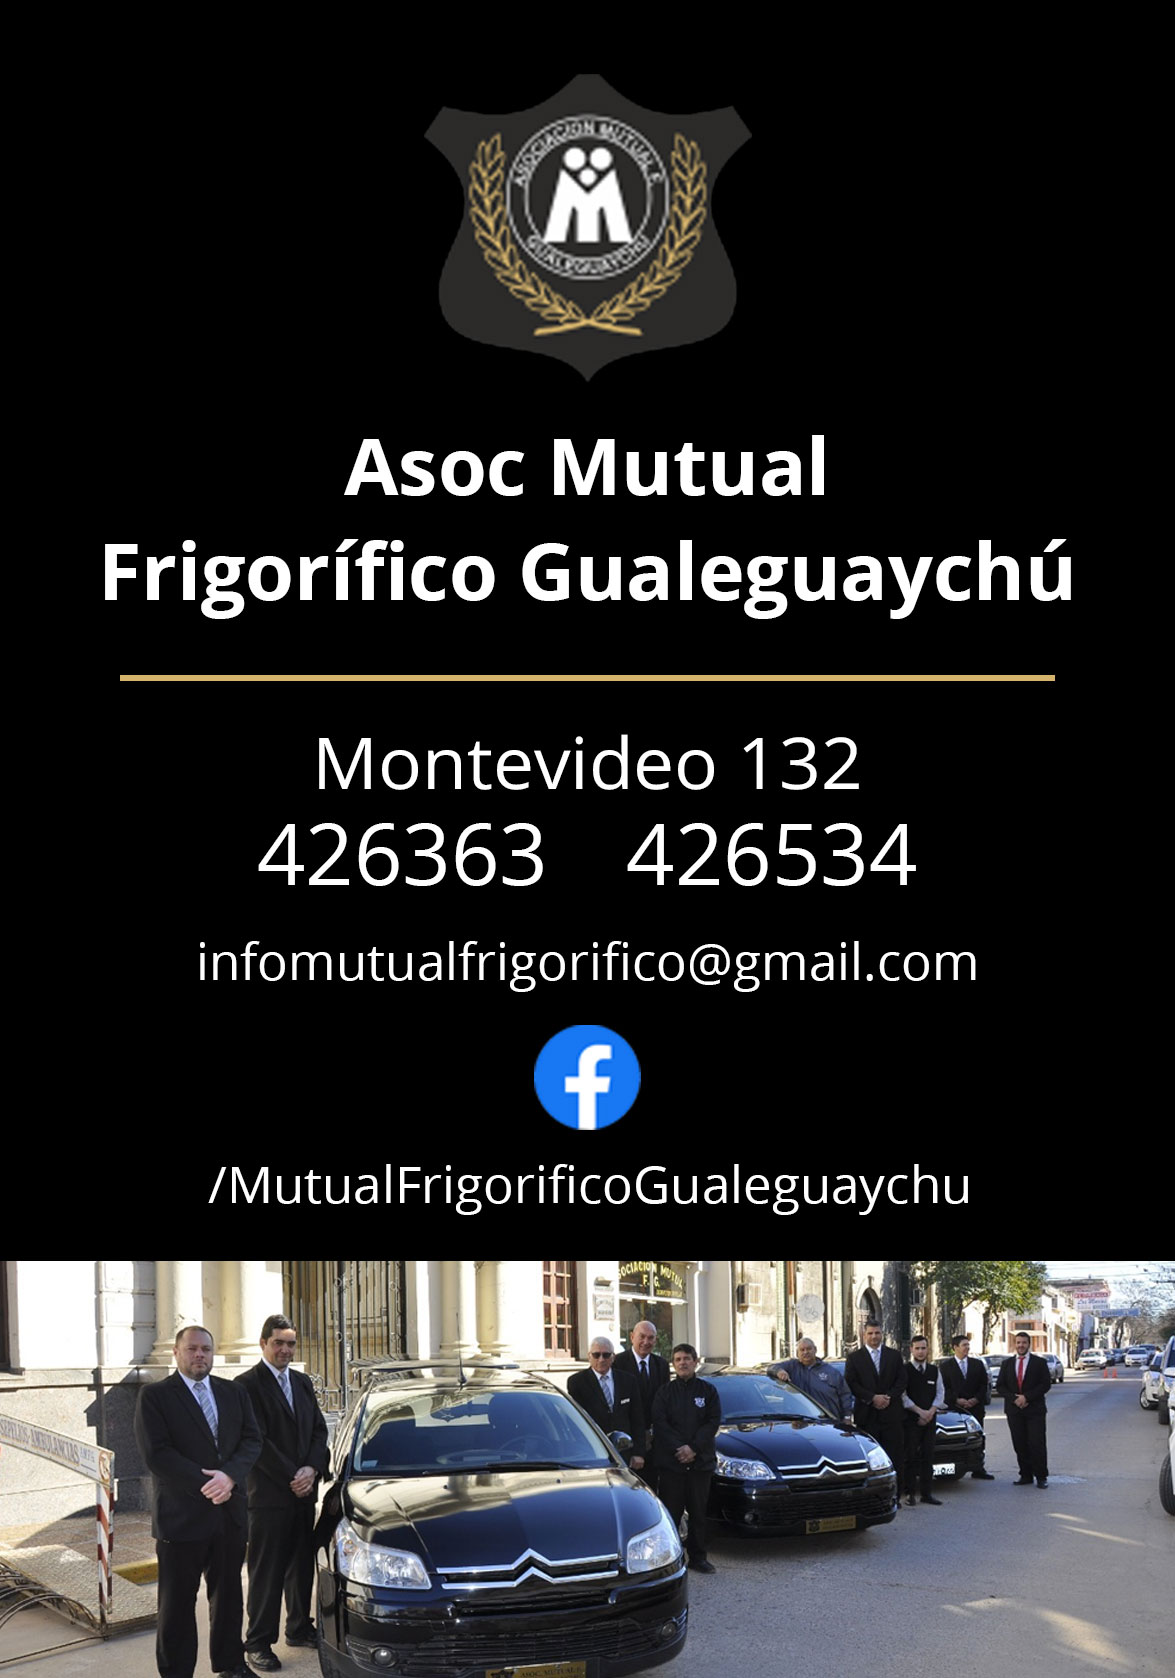 Mutual Frigorífico Gualeguaychú